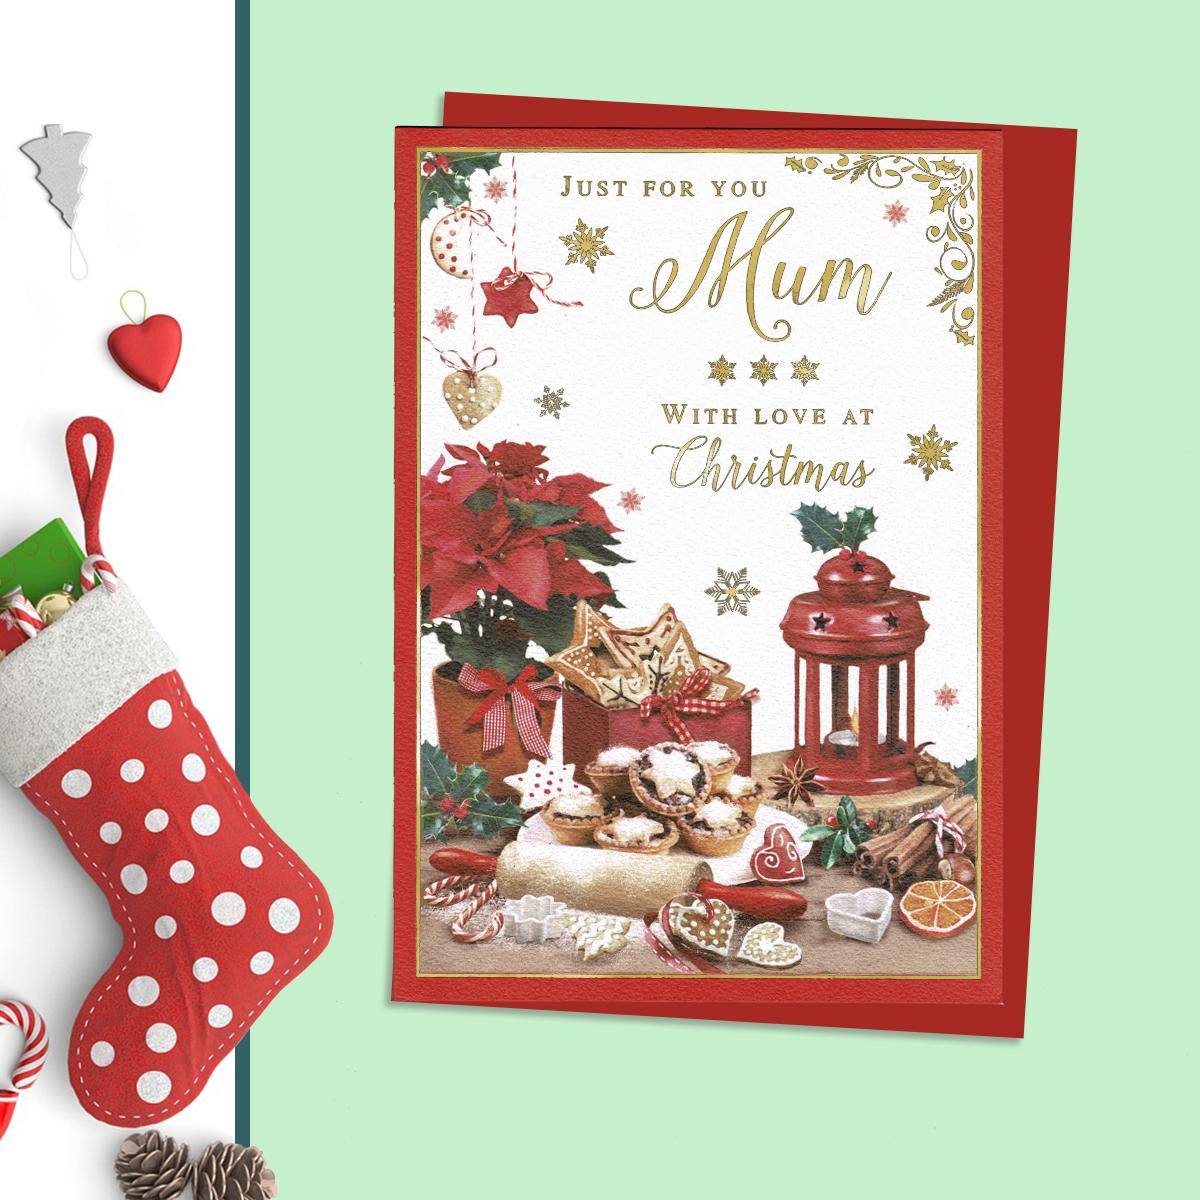 Mum Christmas Card Alongside Its Red Envelope